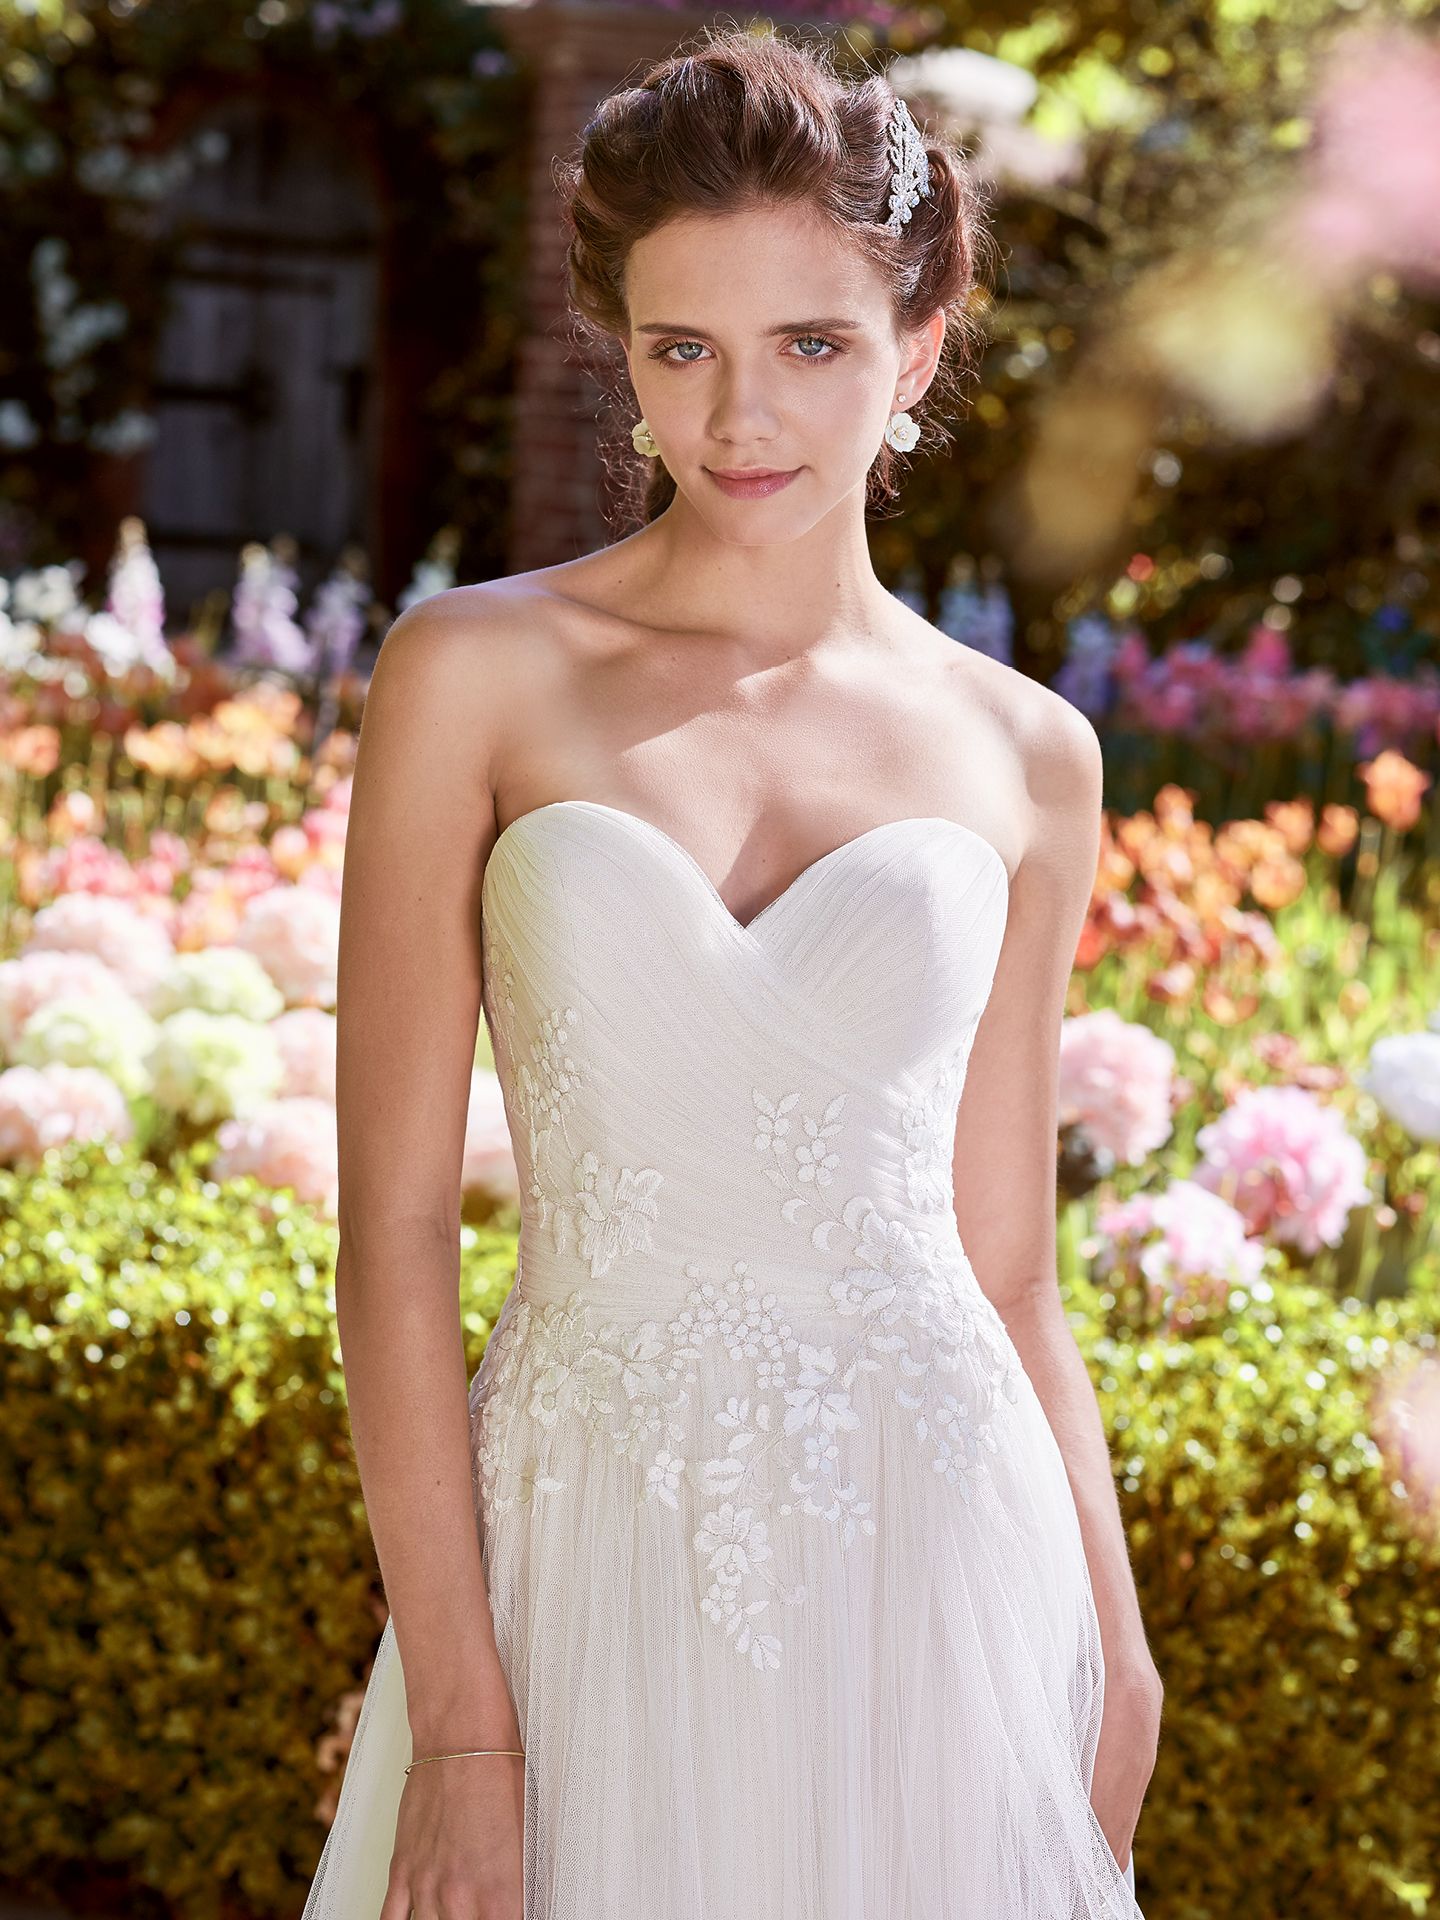 3 Beautiful Dresses for 3 Budget Weddings - Hilary wedding dress by Rebecca Ingram